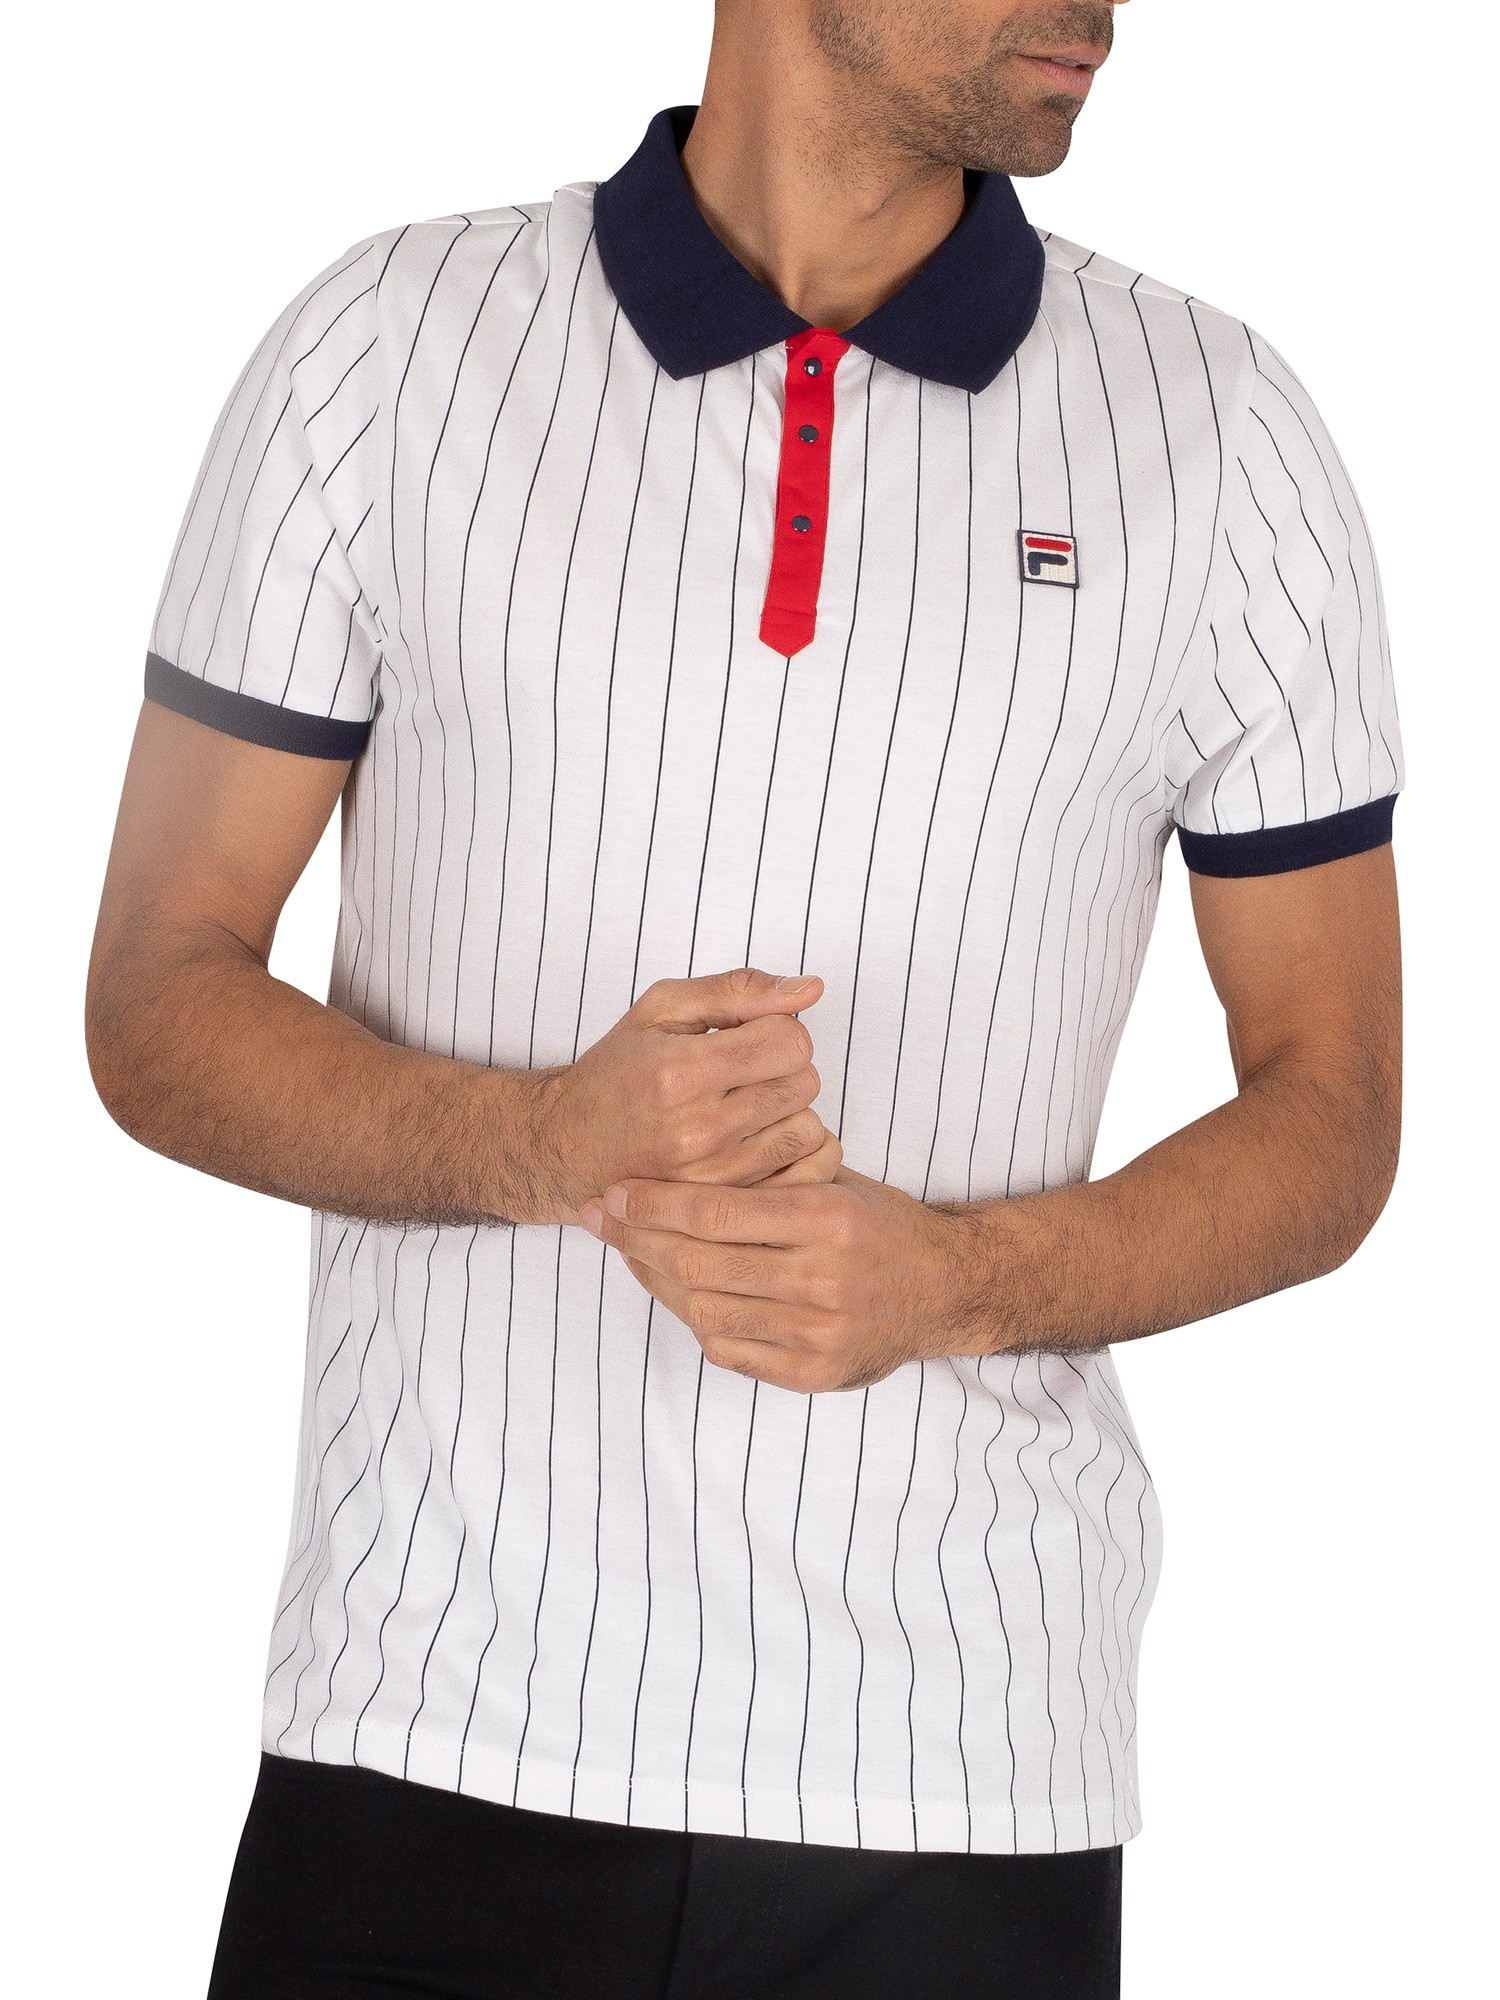 Buy > fila bb1 striped polo shirt > in stock